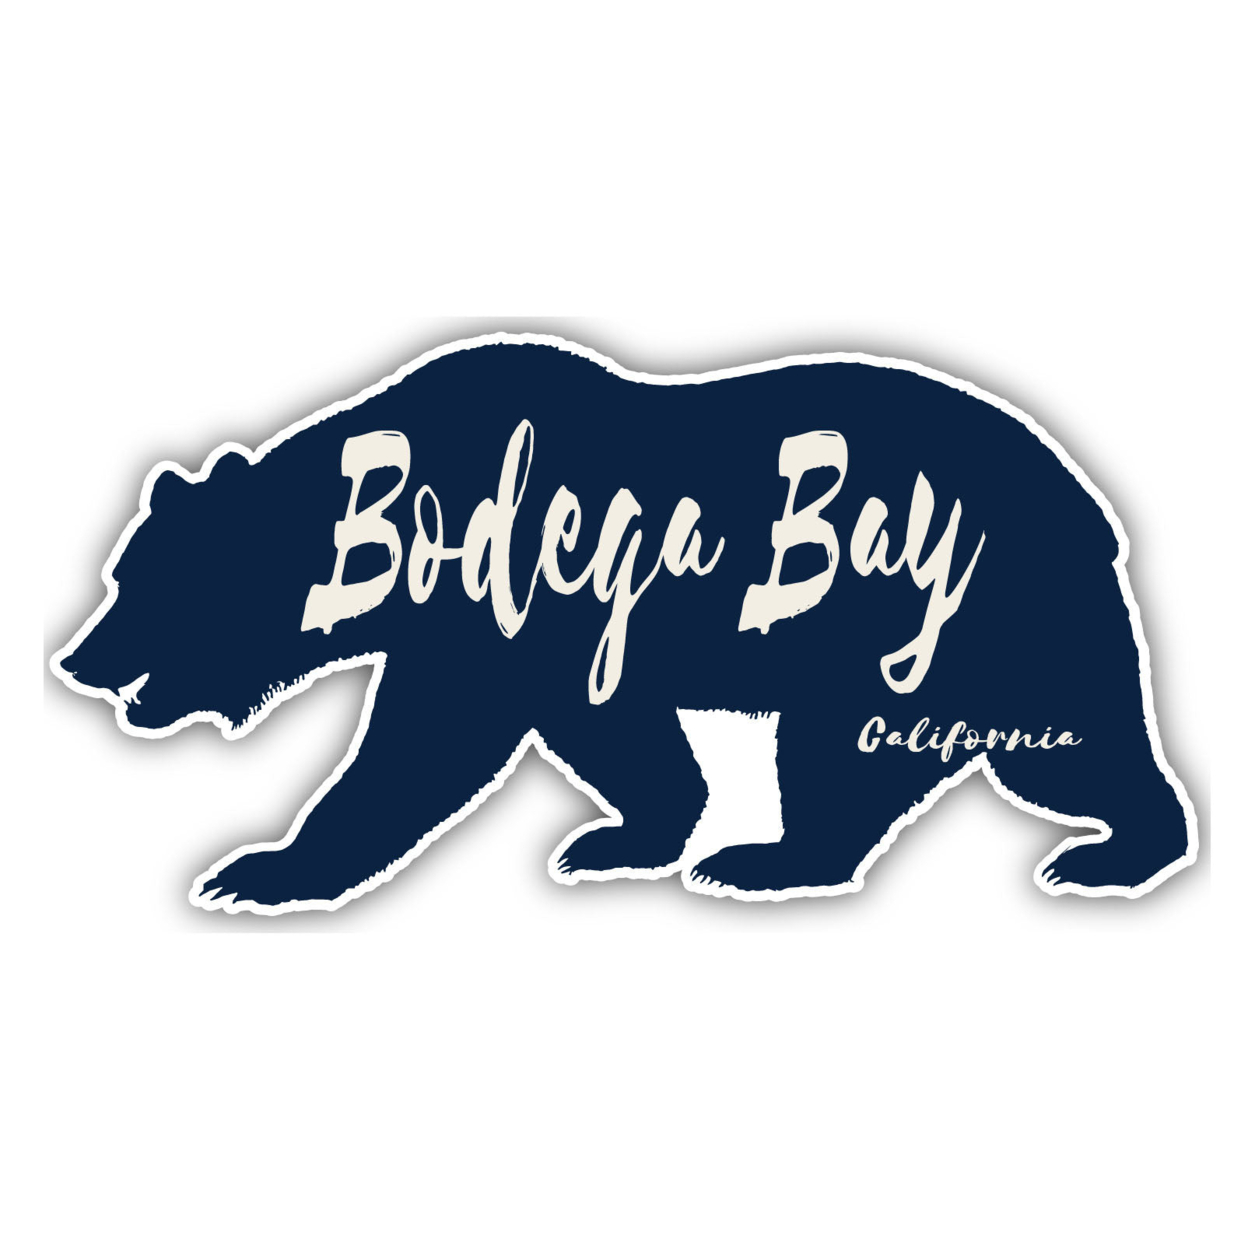 Bodega Bay California Souvenir Decorative Stickers (Choose Theme And Size) - Single Unit, 6-Inch, Camp Life